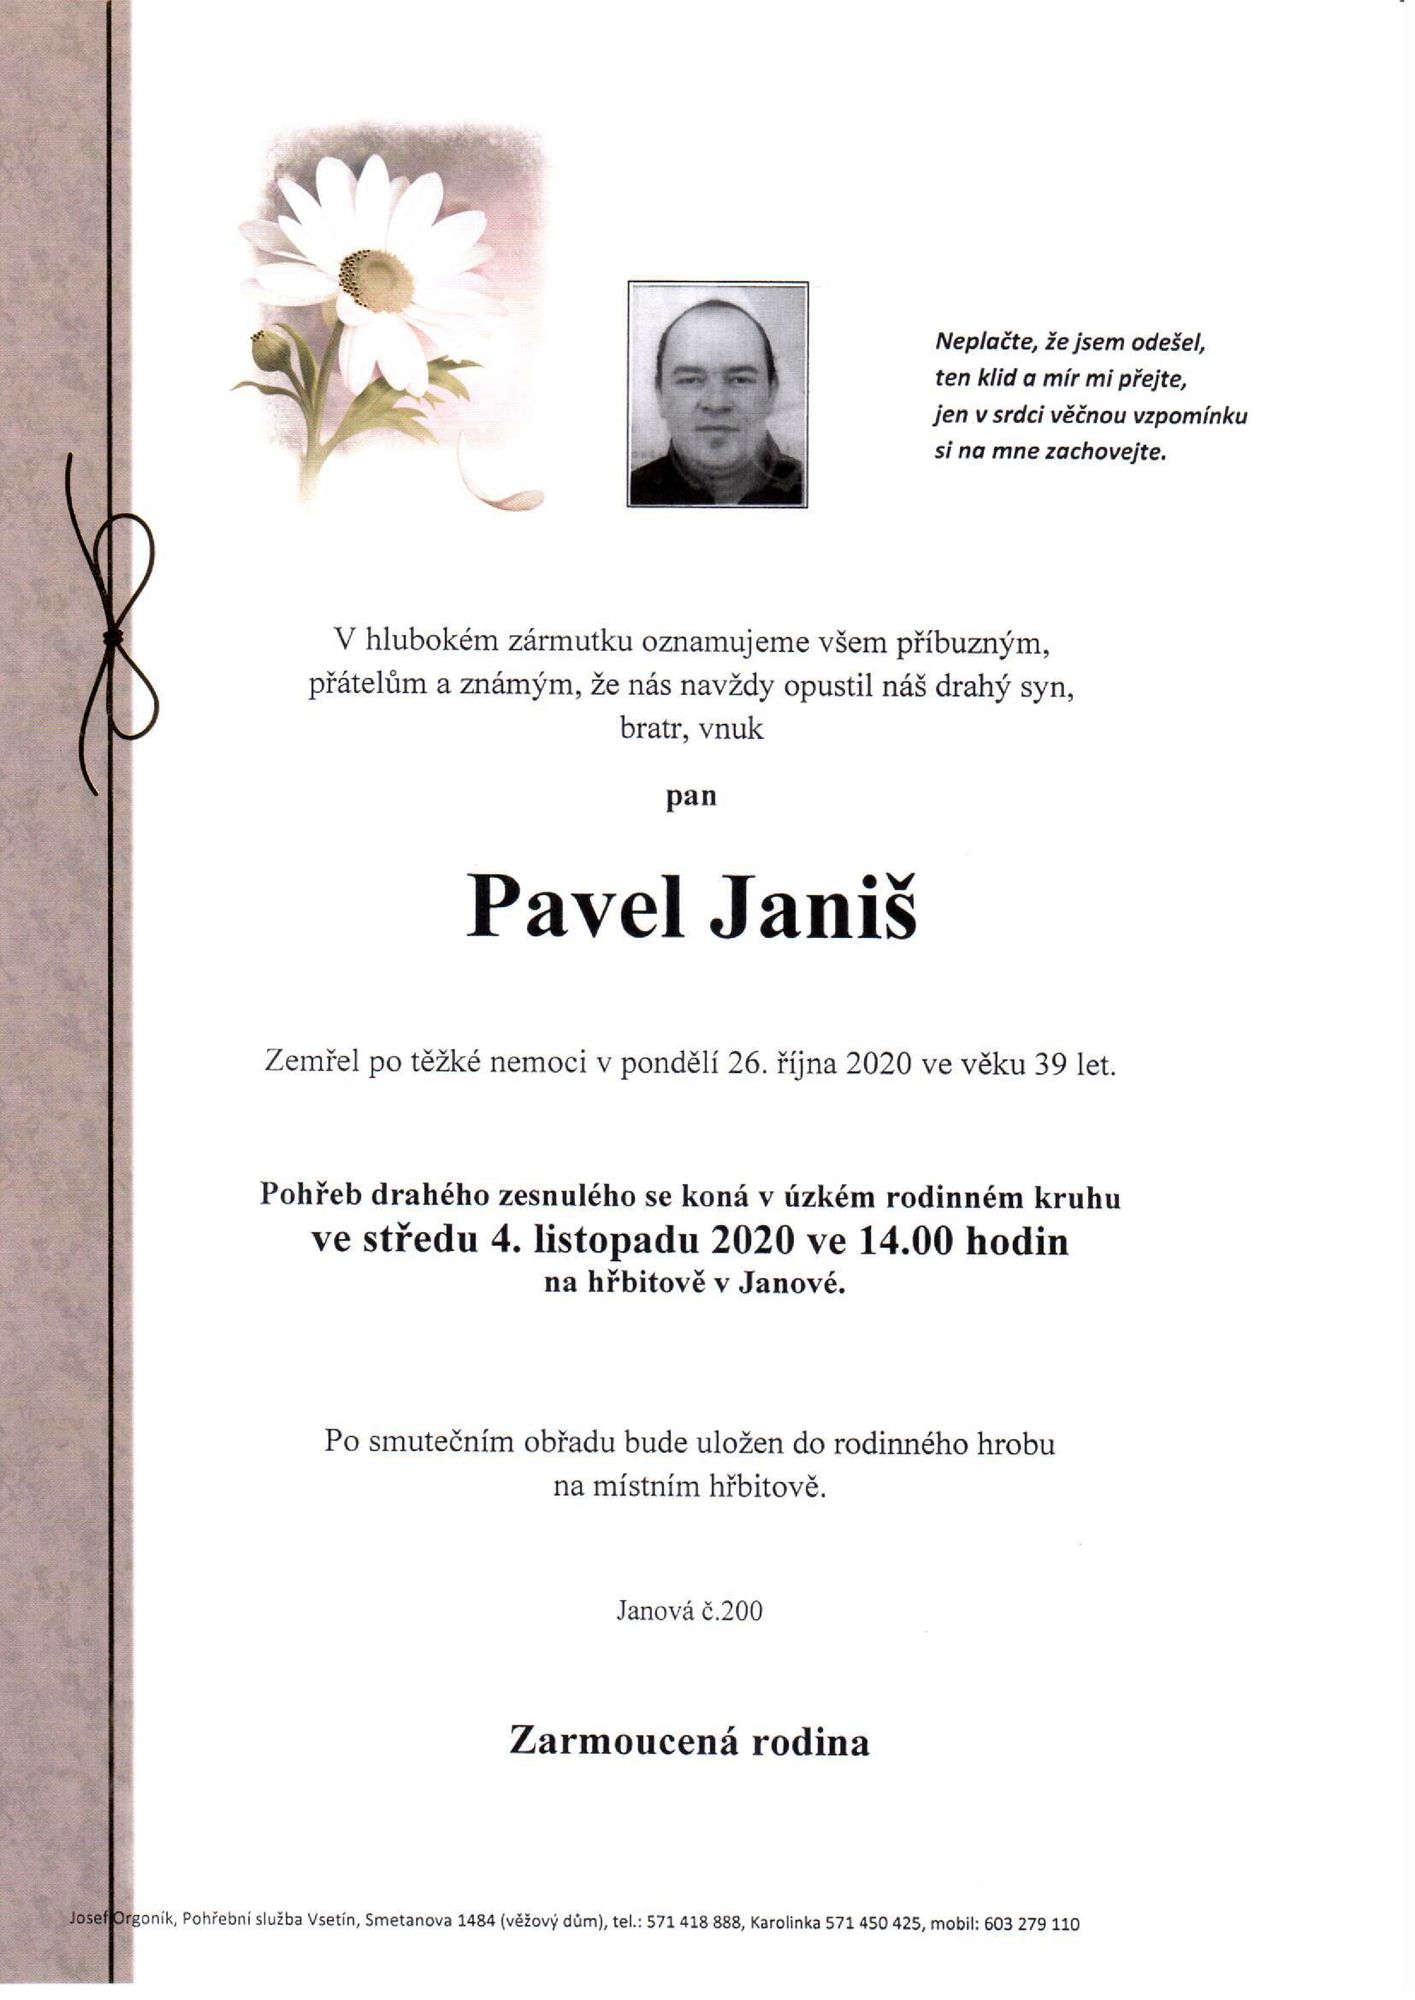 Pavel Janiš